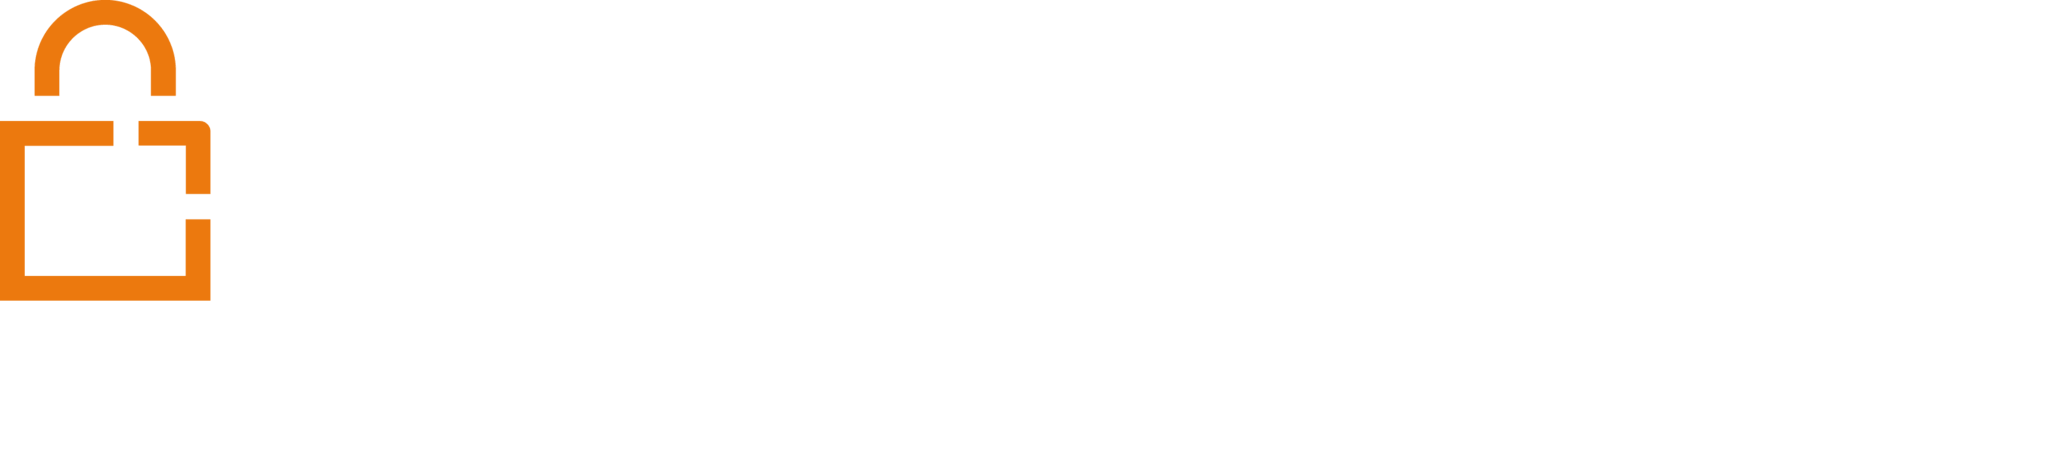 jefacture-logo